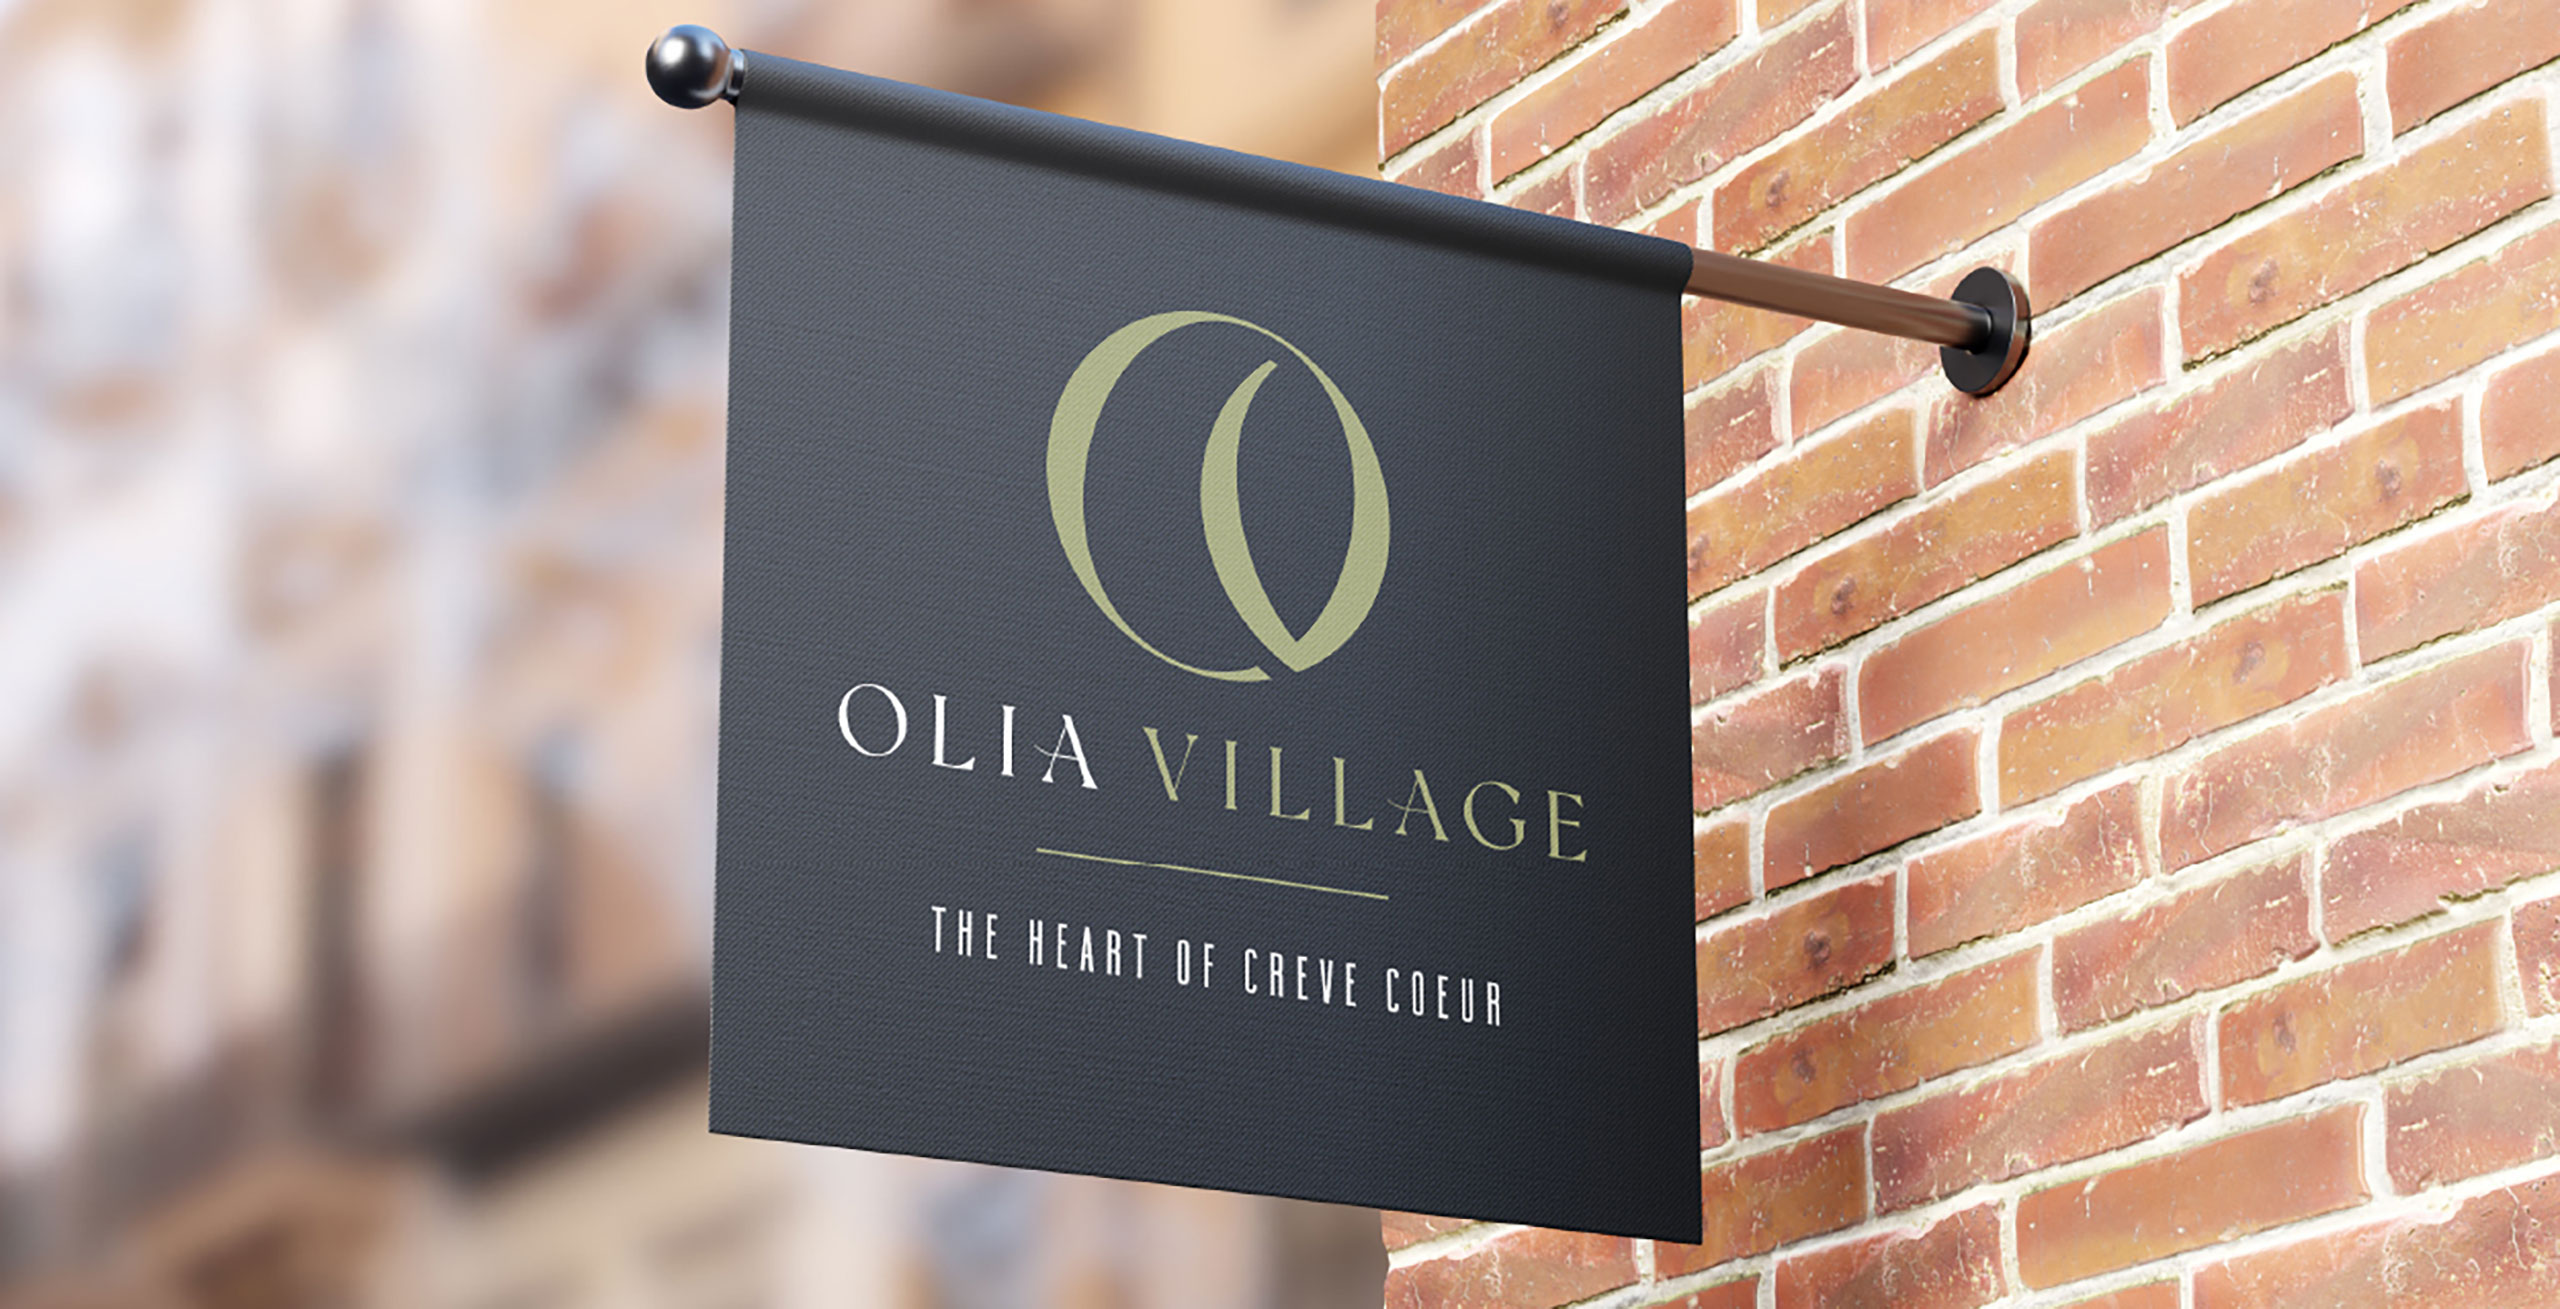 olia village brand and web development